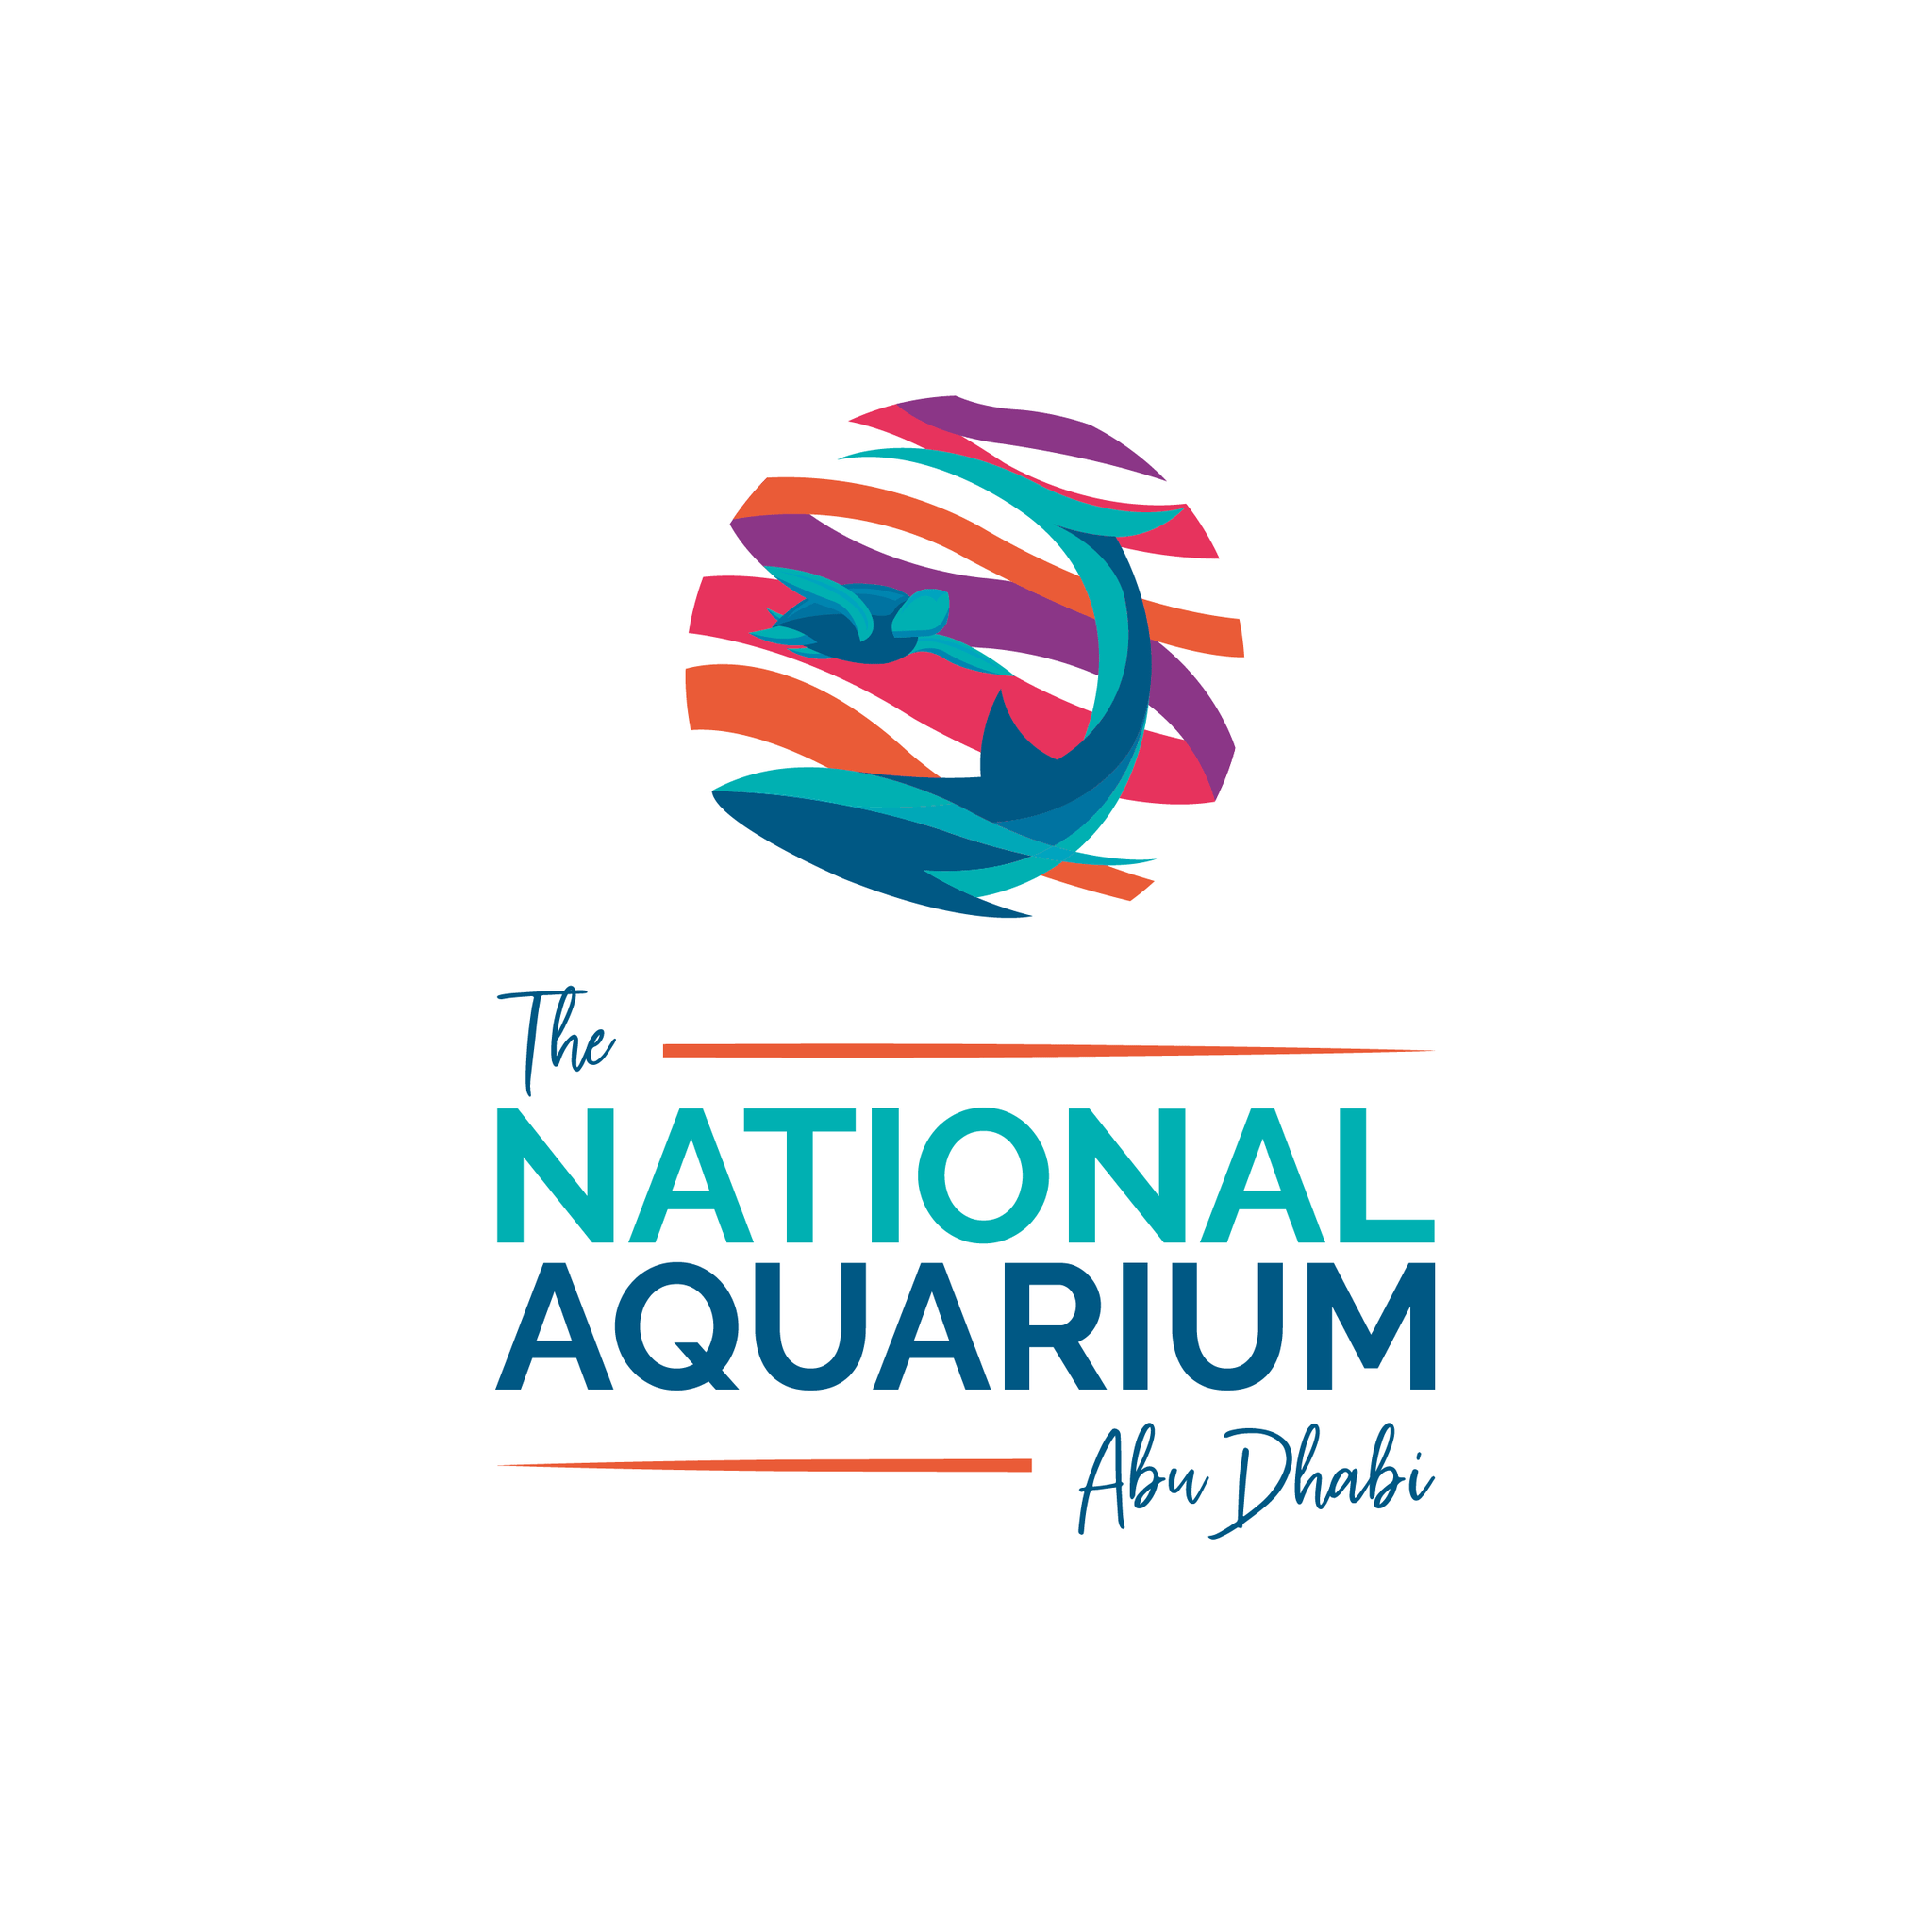 The National Aquarium Abu Dhabi - Coming Soon in UAE